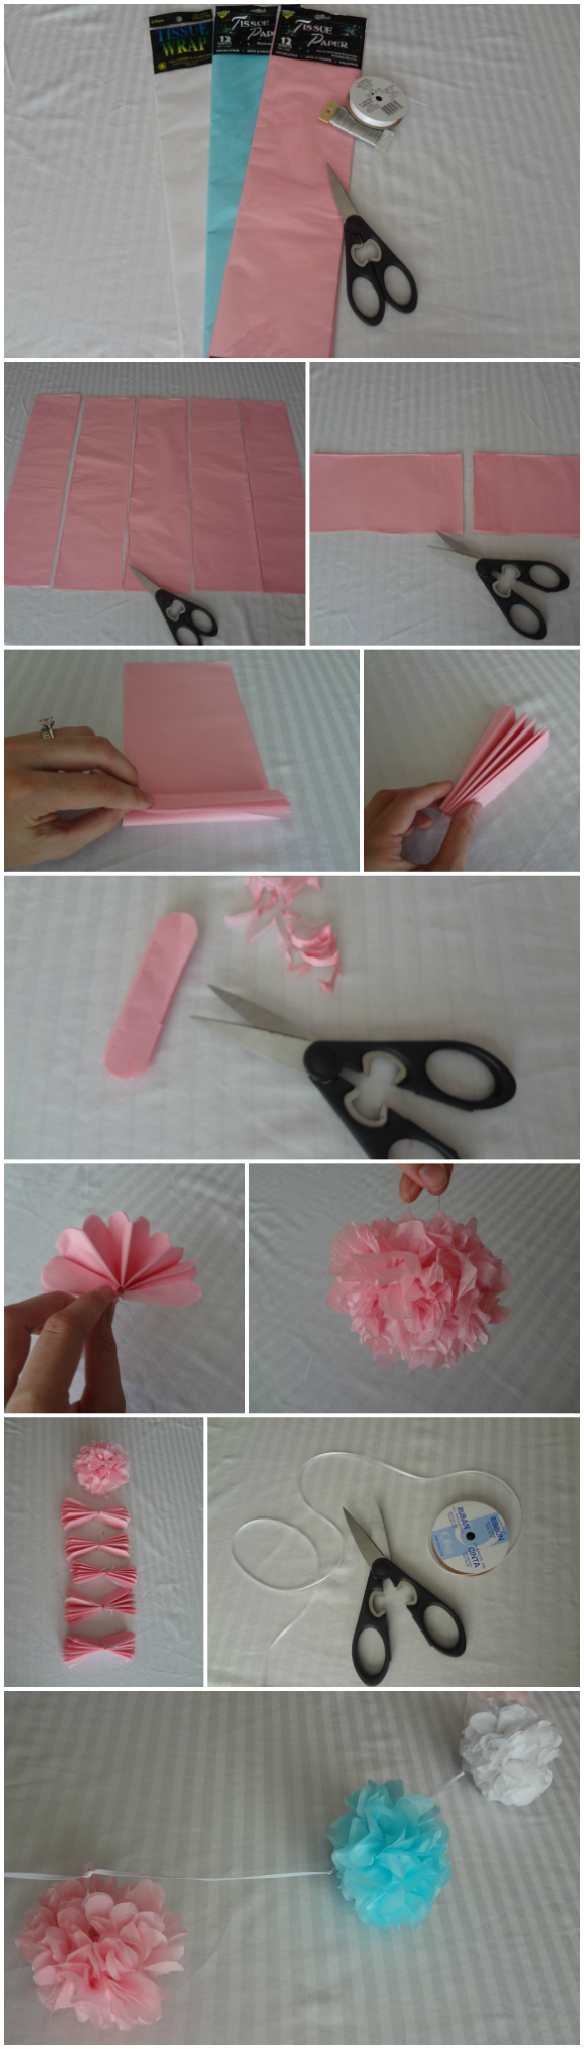 How to make a tissue pom pom galand via One Stylish Party